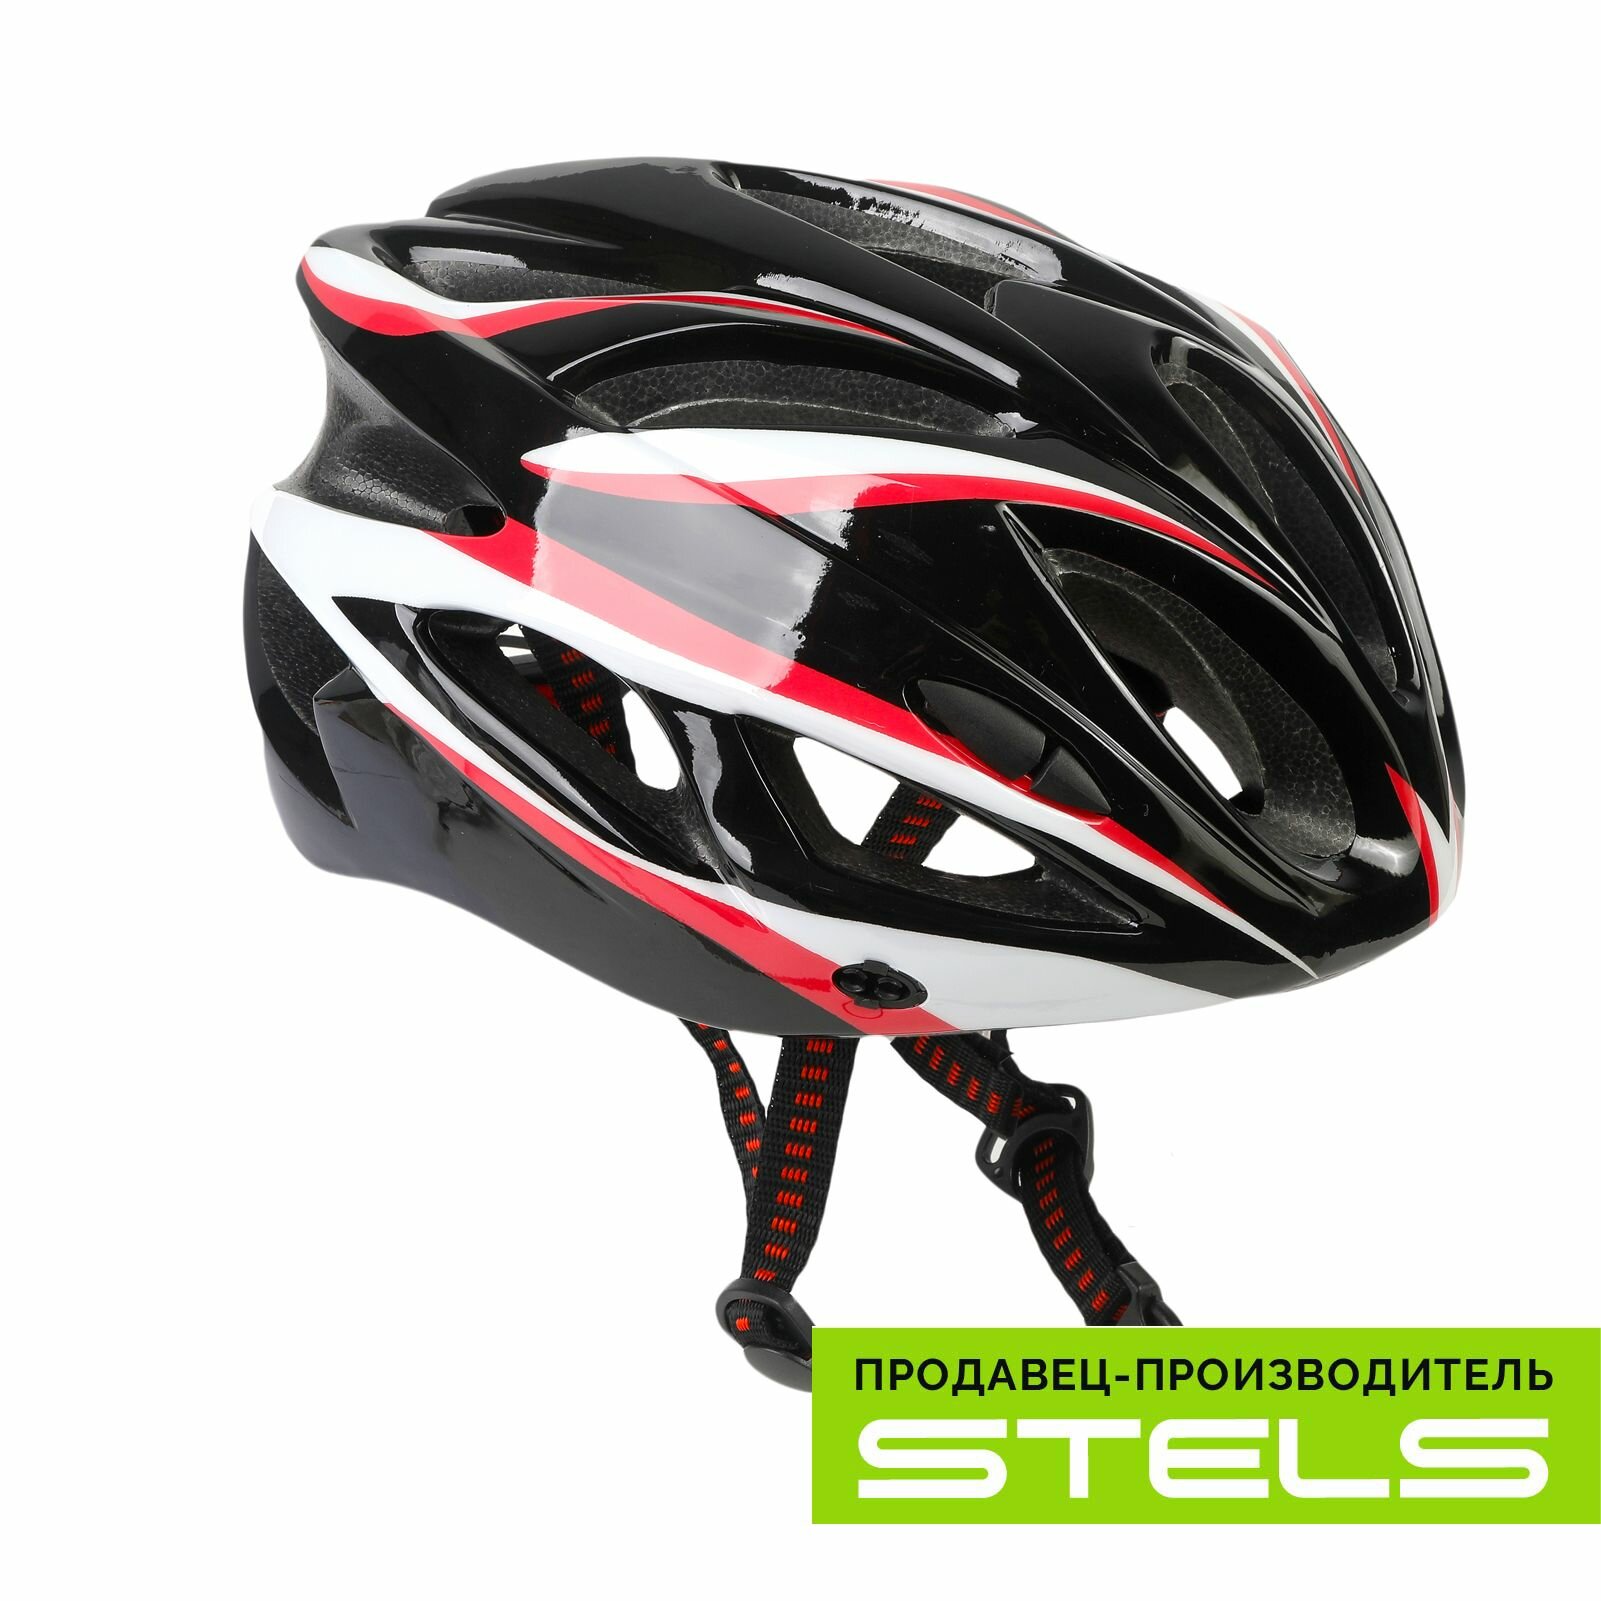 Шлем защитный для катания на велосипеде FSD-HL022 (in-mold) чёрно-красно-белый, размер L NEW